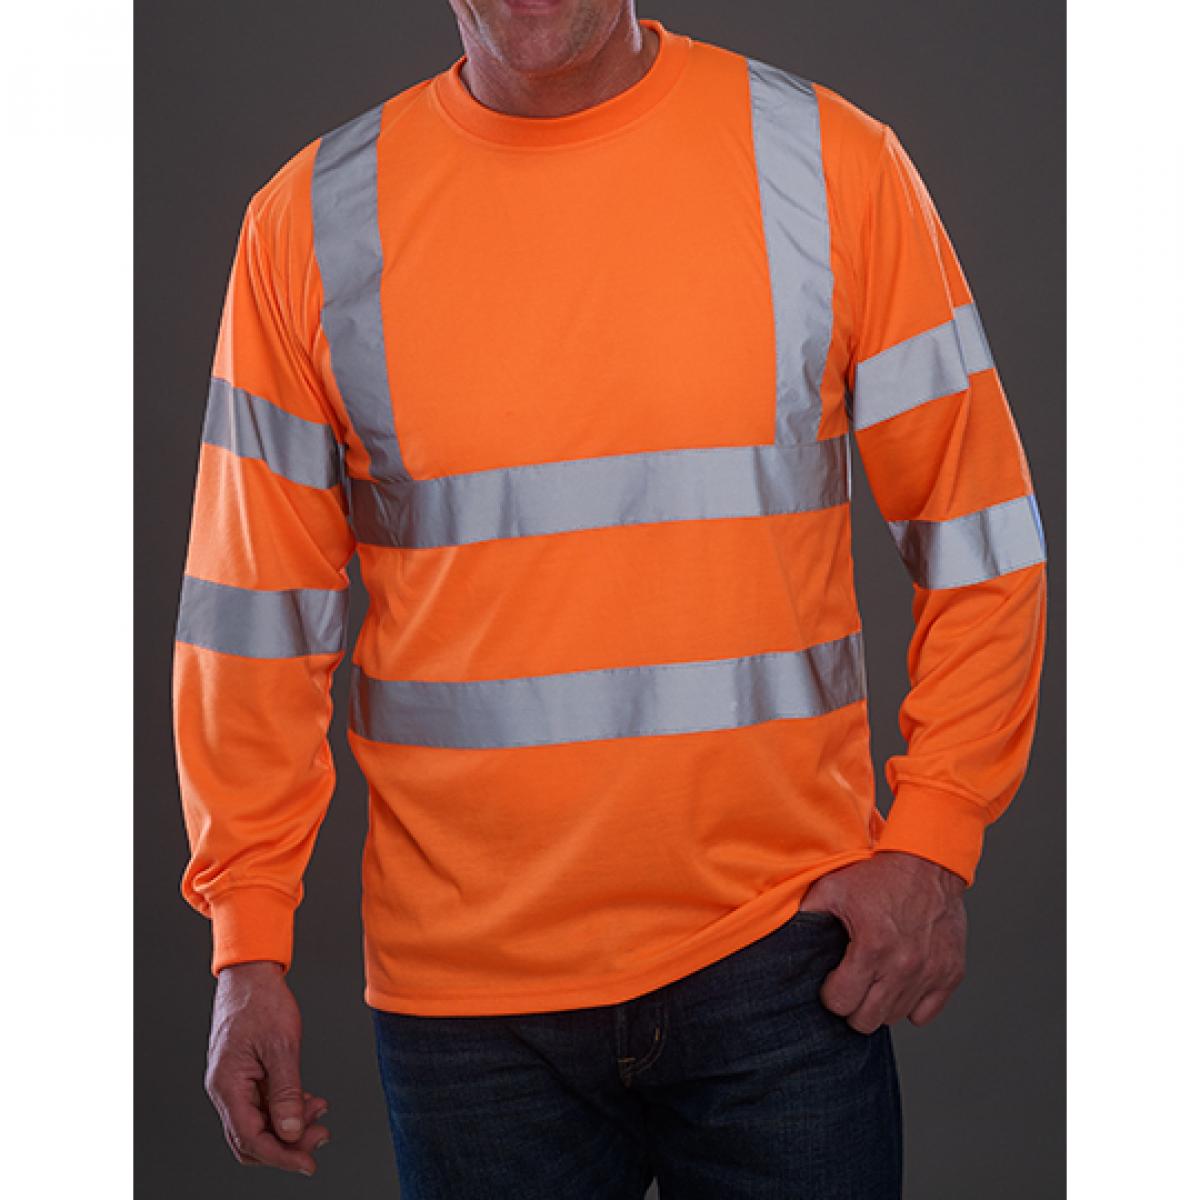 Hersteller: YOKO Herstellernummer: HVJ420 Artikelbezeichnung: Hi Vis Long Sleeve T-Shirt - EN ISO 20471:2013 Class 3 Farbe: Hi-Vis Orange